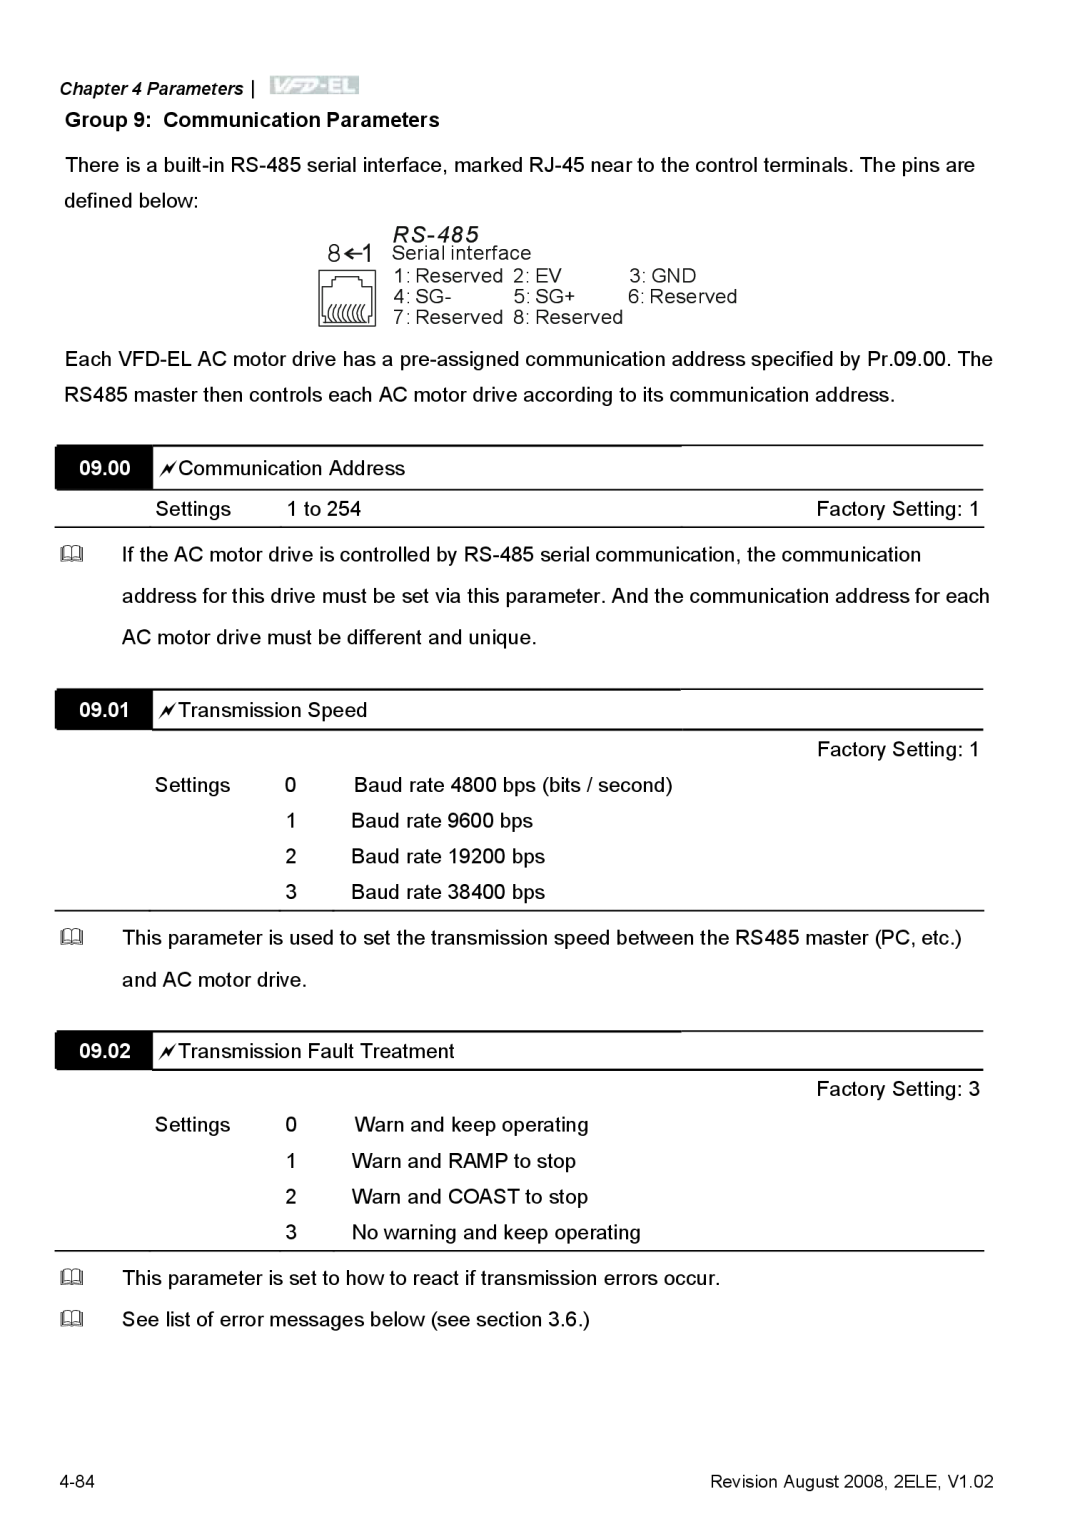 Delta Electronics VFD-EL manual RS-485, Group 9 Communication Parameters, 09.00 